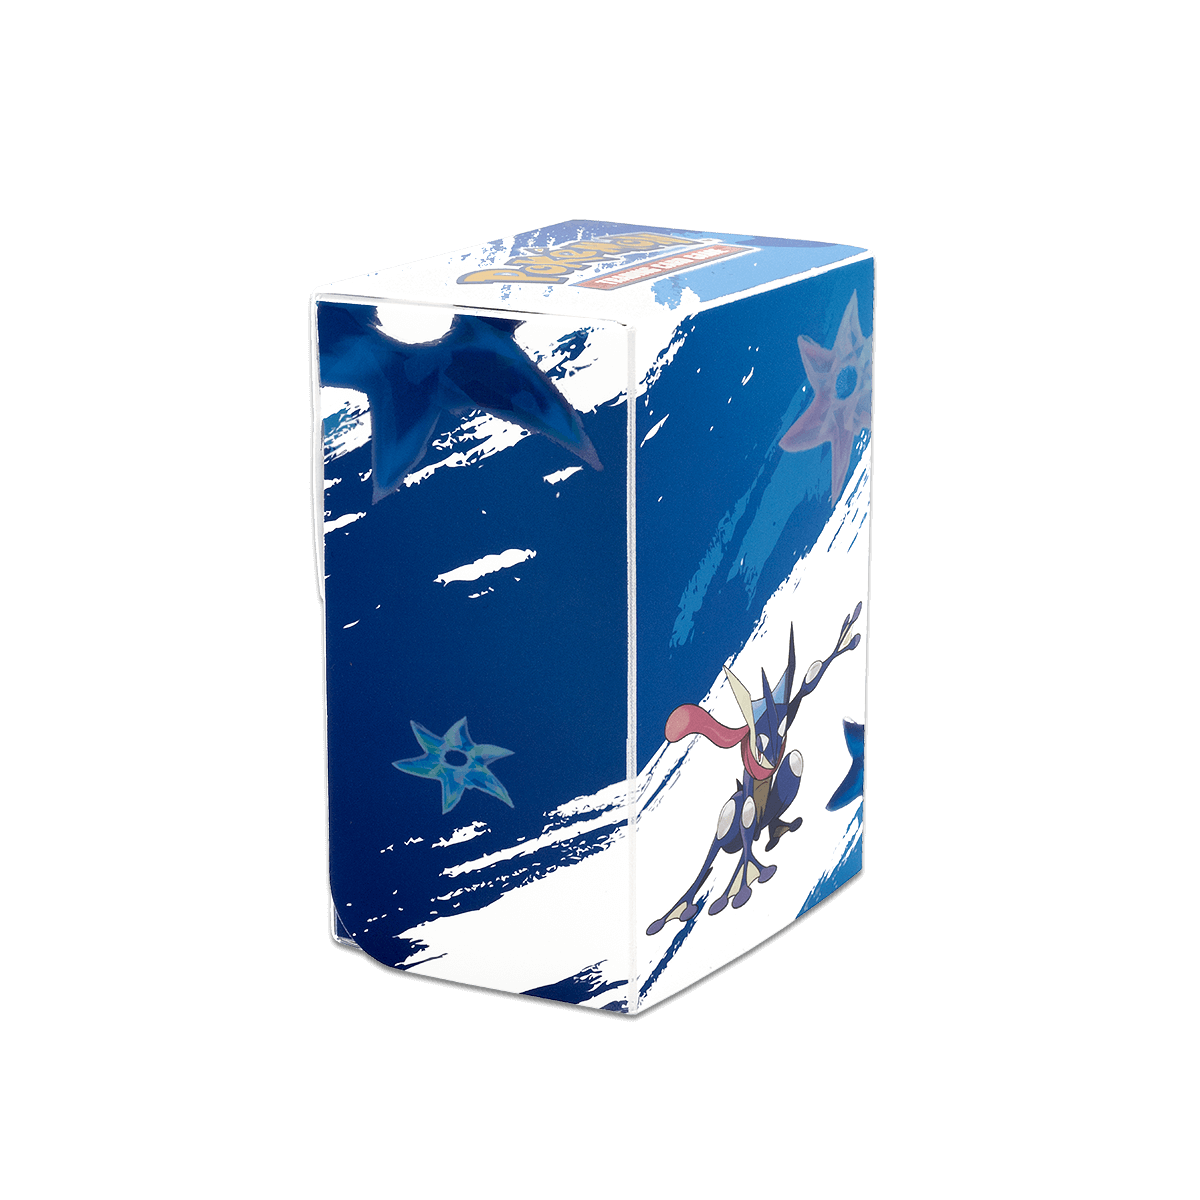 Greninja Full-View Deck Box for Pokémon | Ultra PRO International